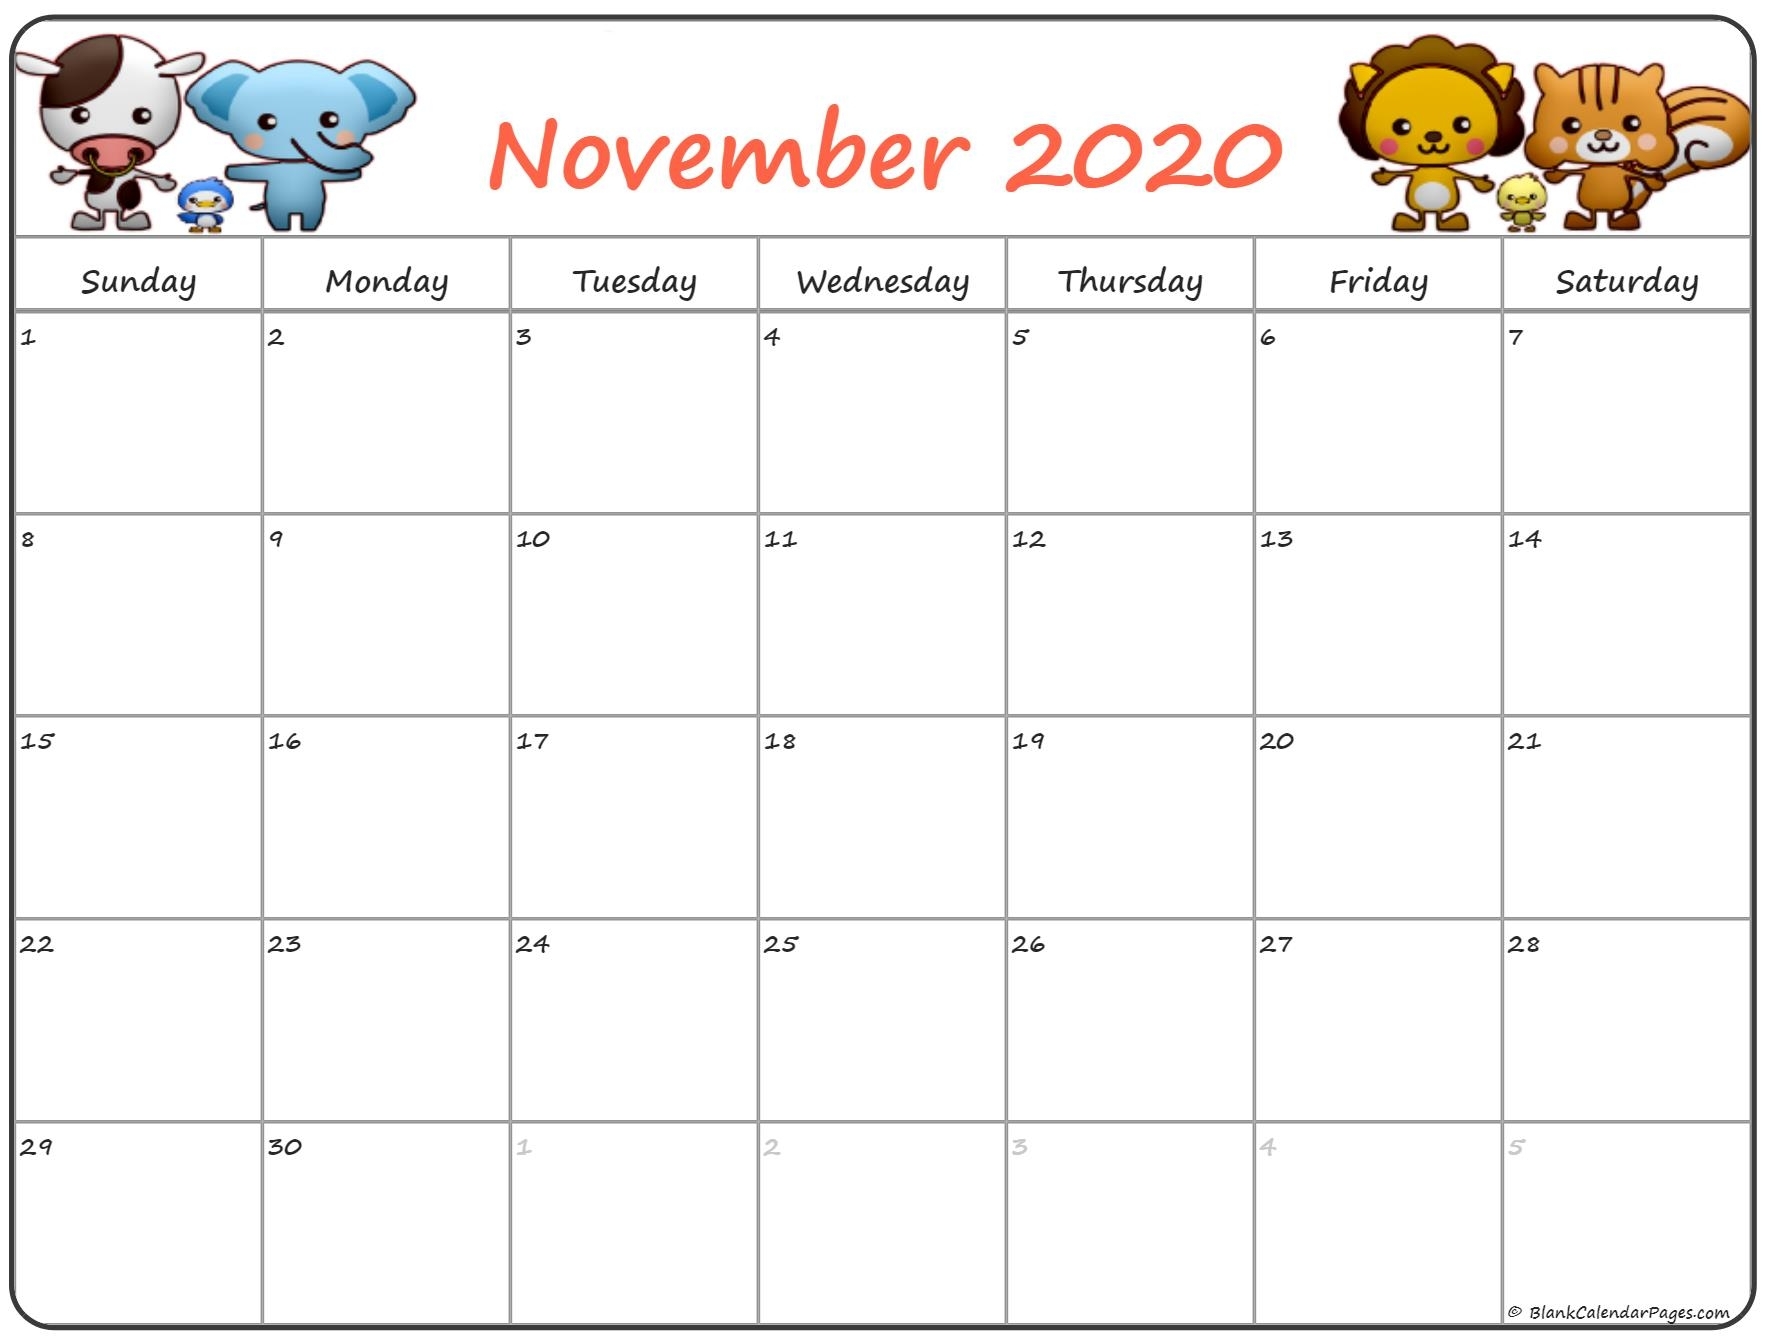 November 2020 Pregnancy Calendar | Fertility Calendar